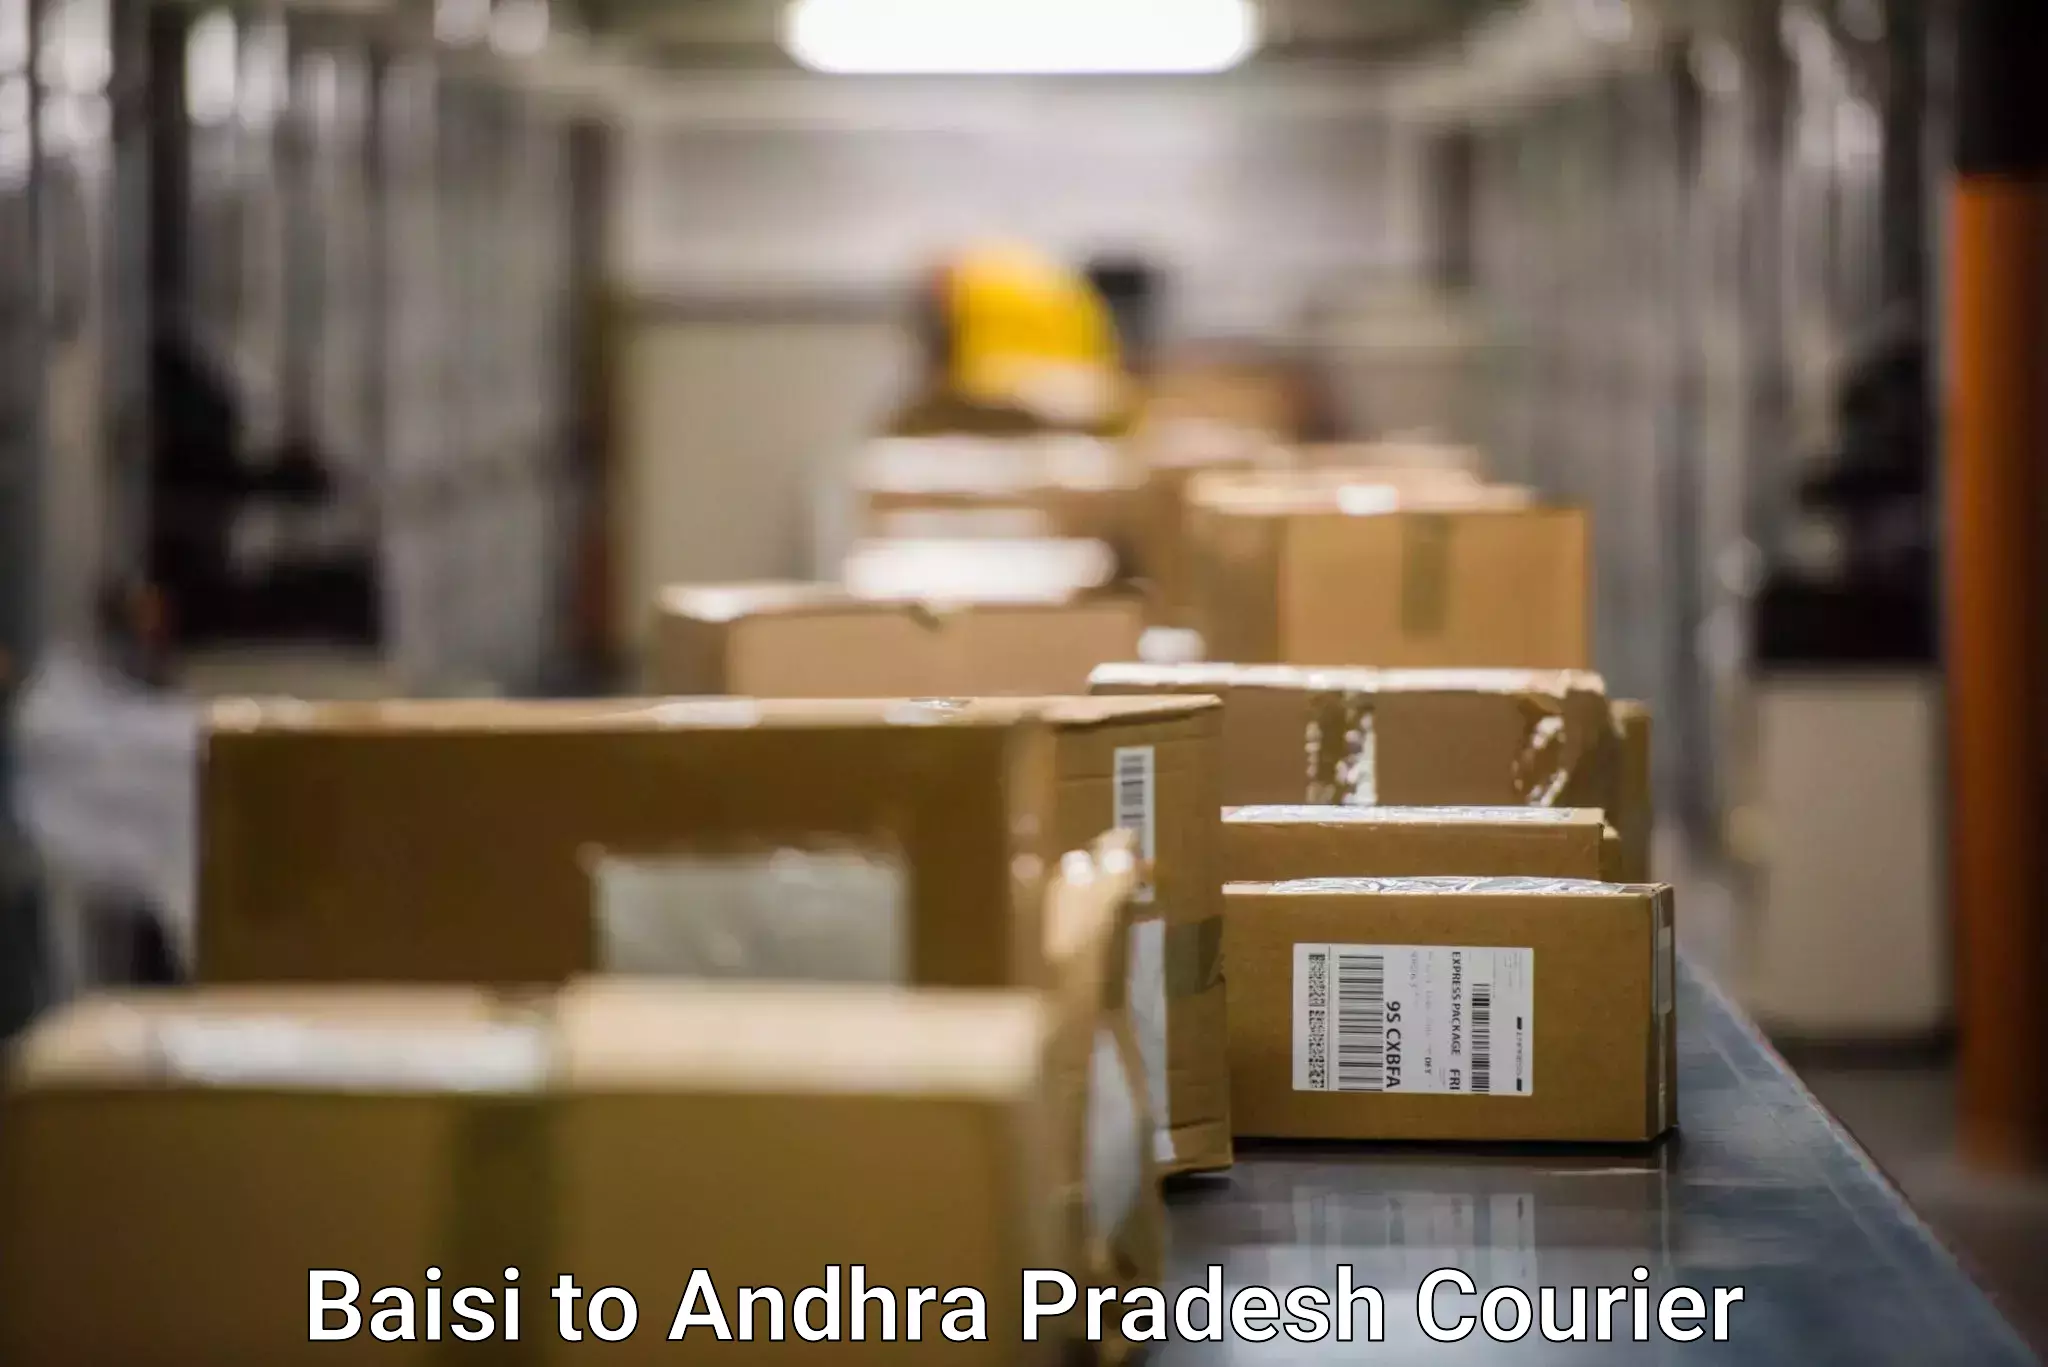 Courier service comparison Baisi to Andhra Pradesh